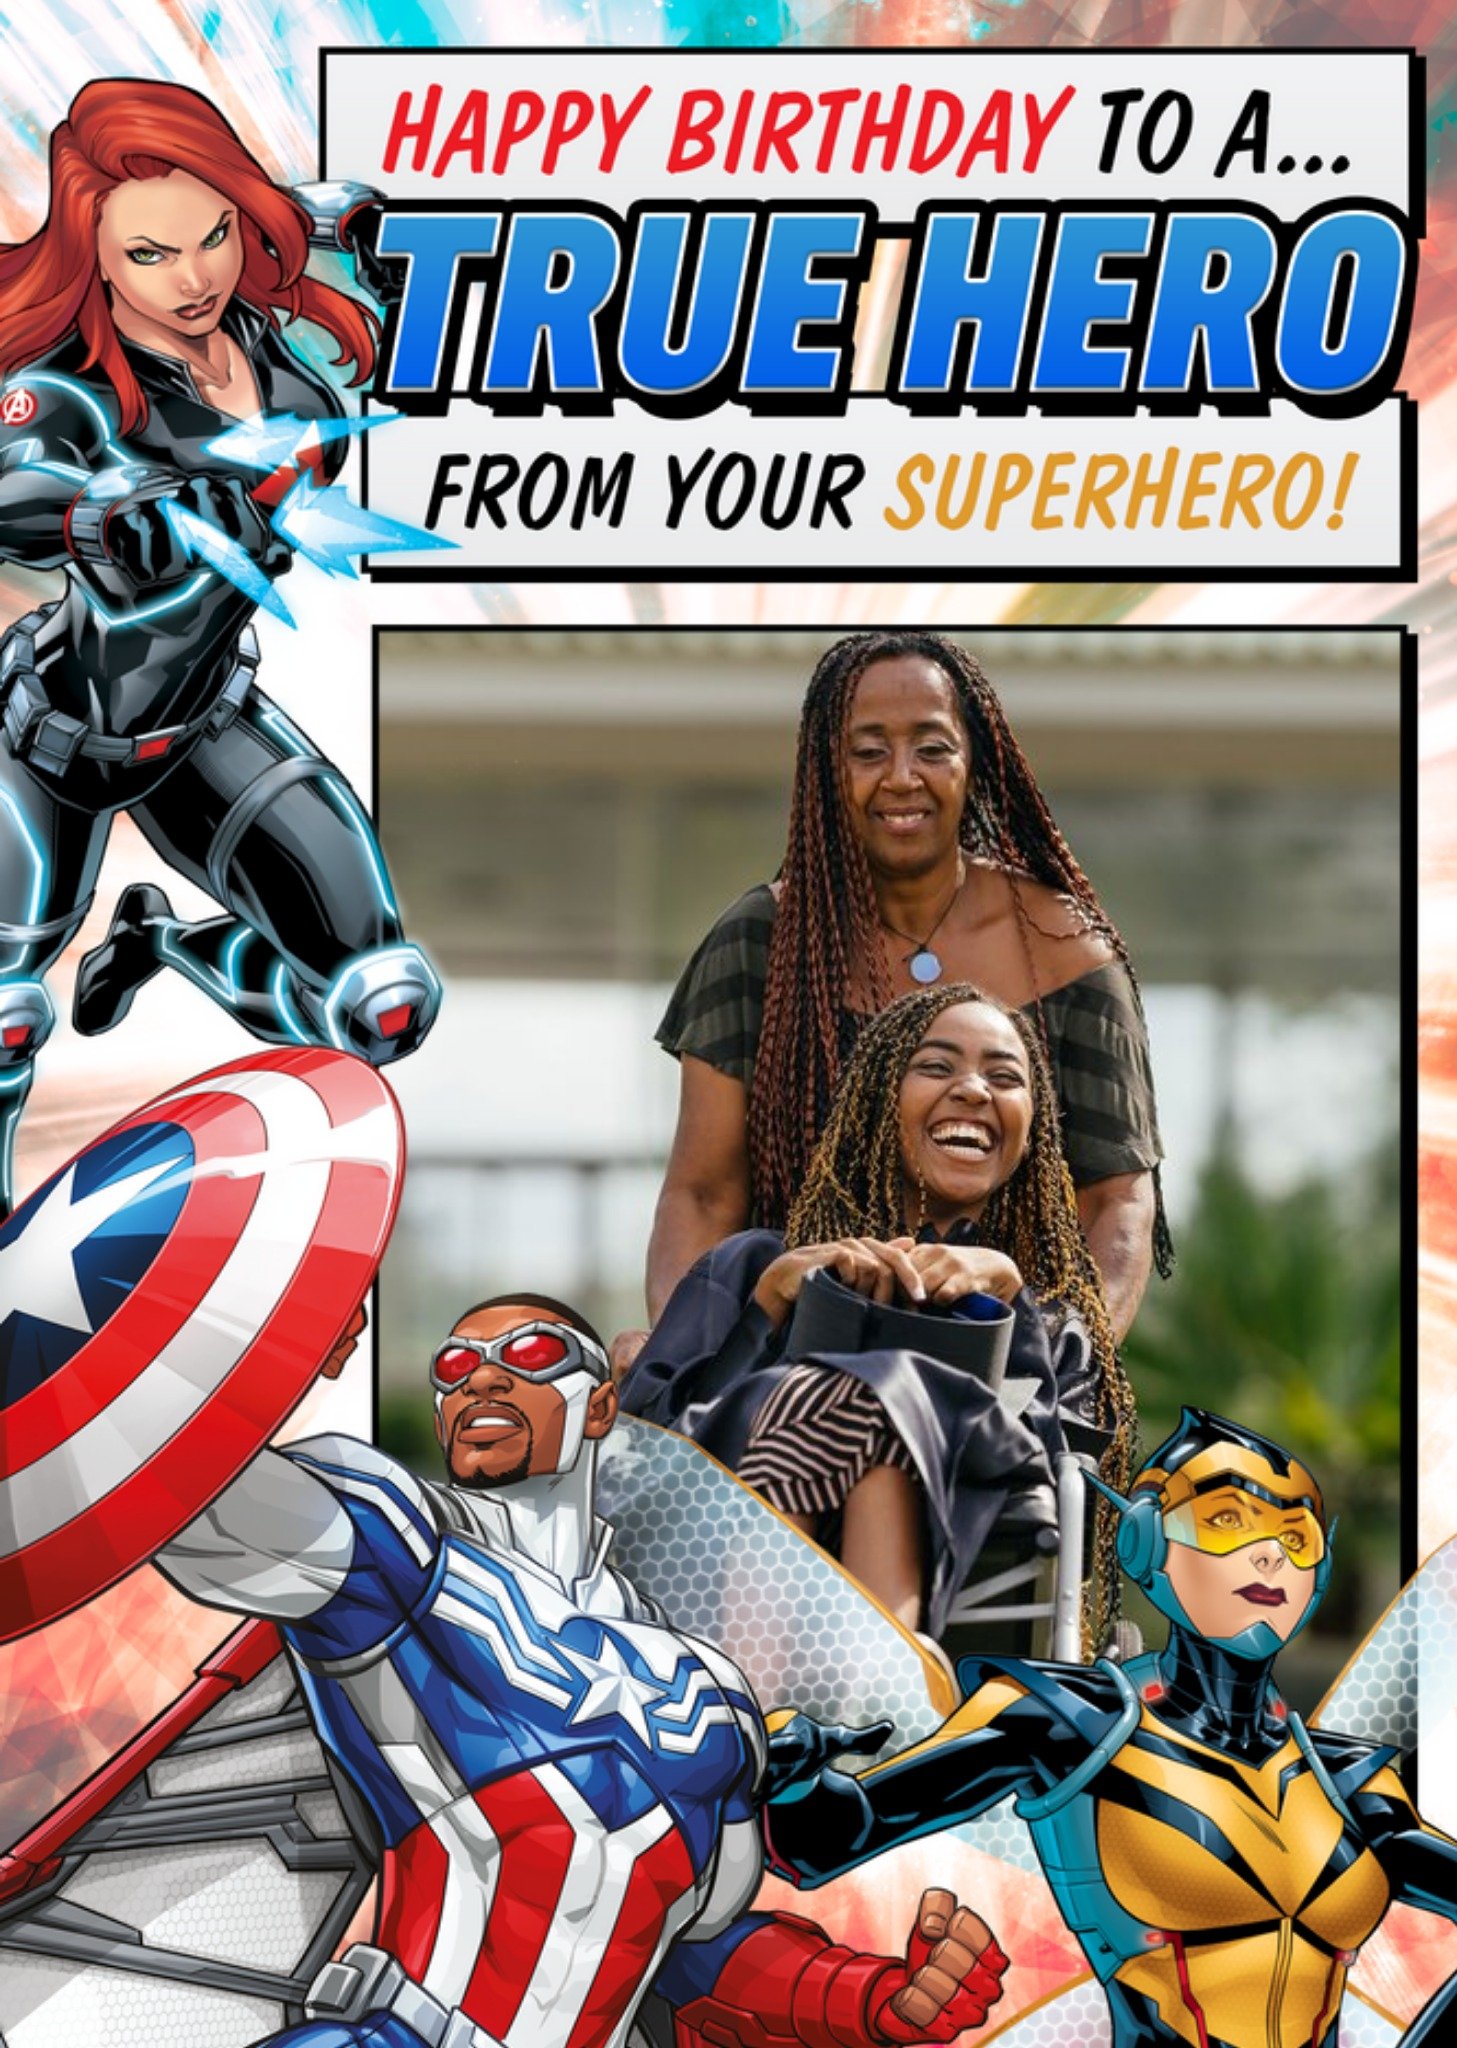 The Avengers True Hero Photo Upload Card Ecard